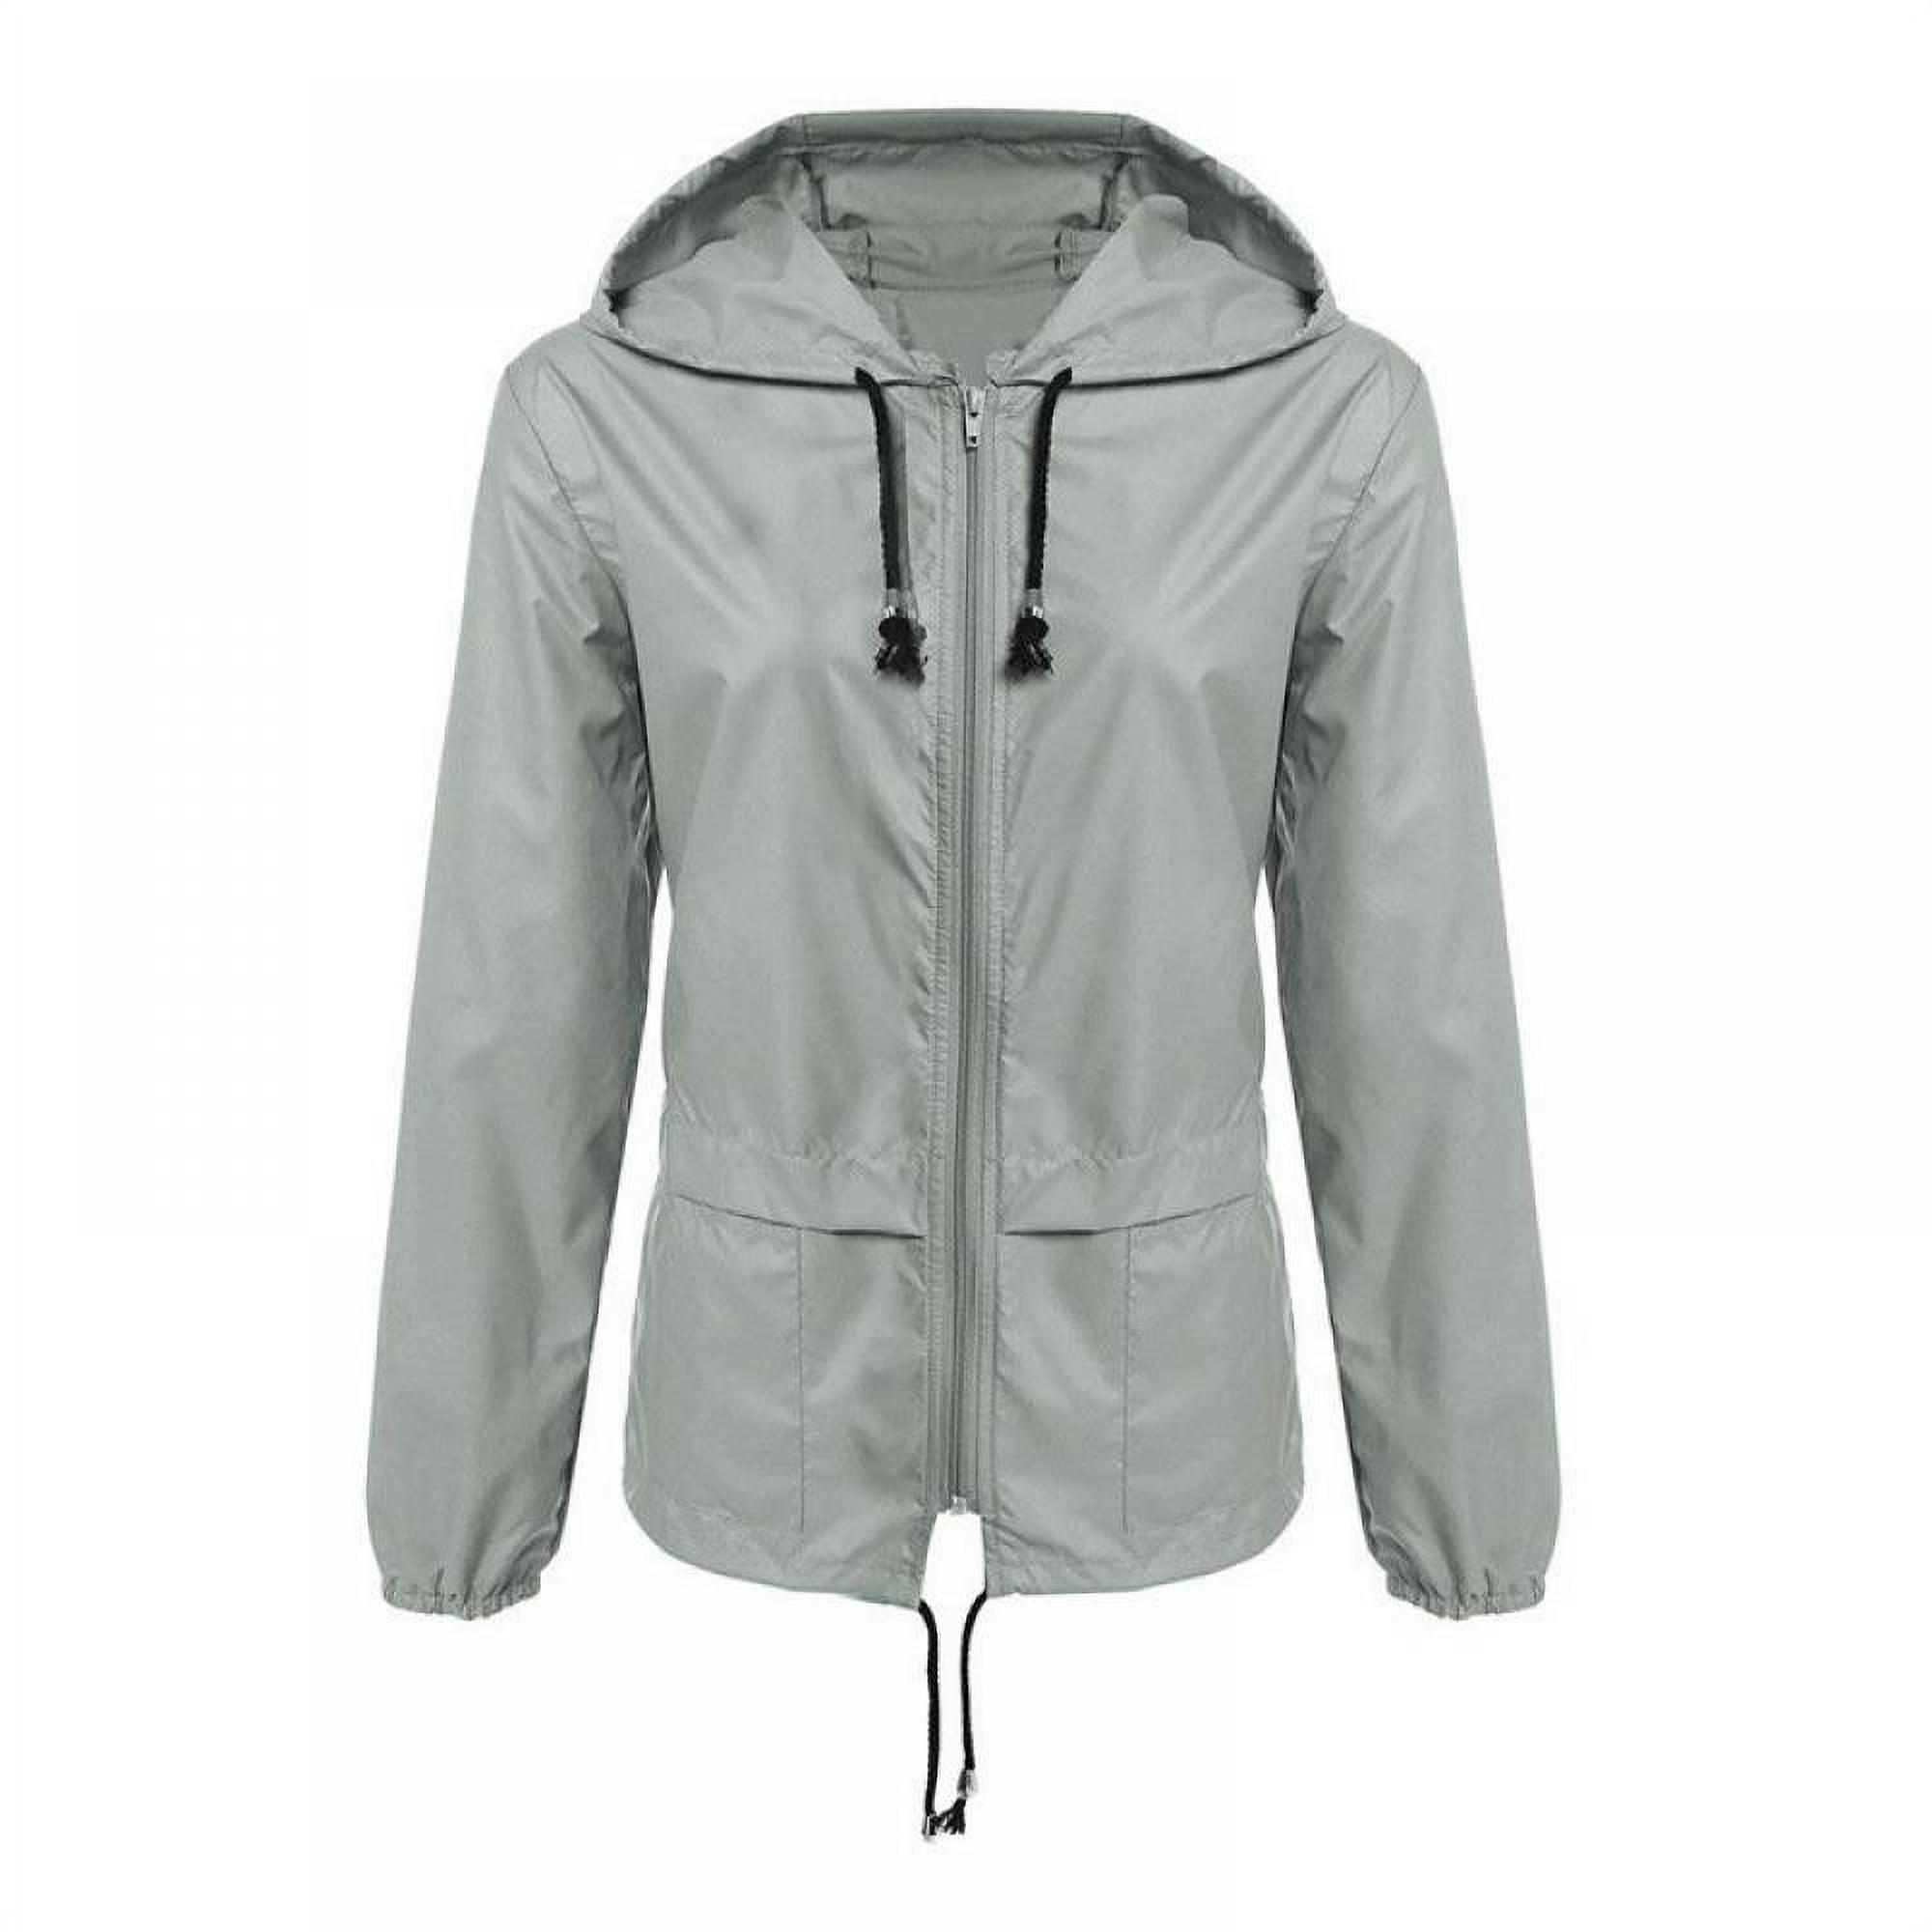 Topwoner Women's Raincoat Lightweight Rain Jacket Hooded Windbreaker Pockets for Outdoor - image 4 of 8